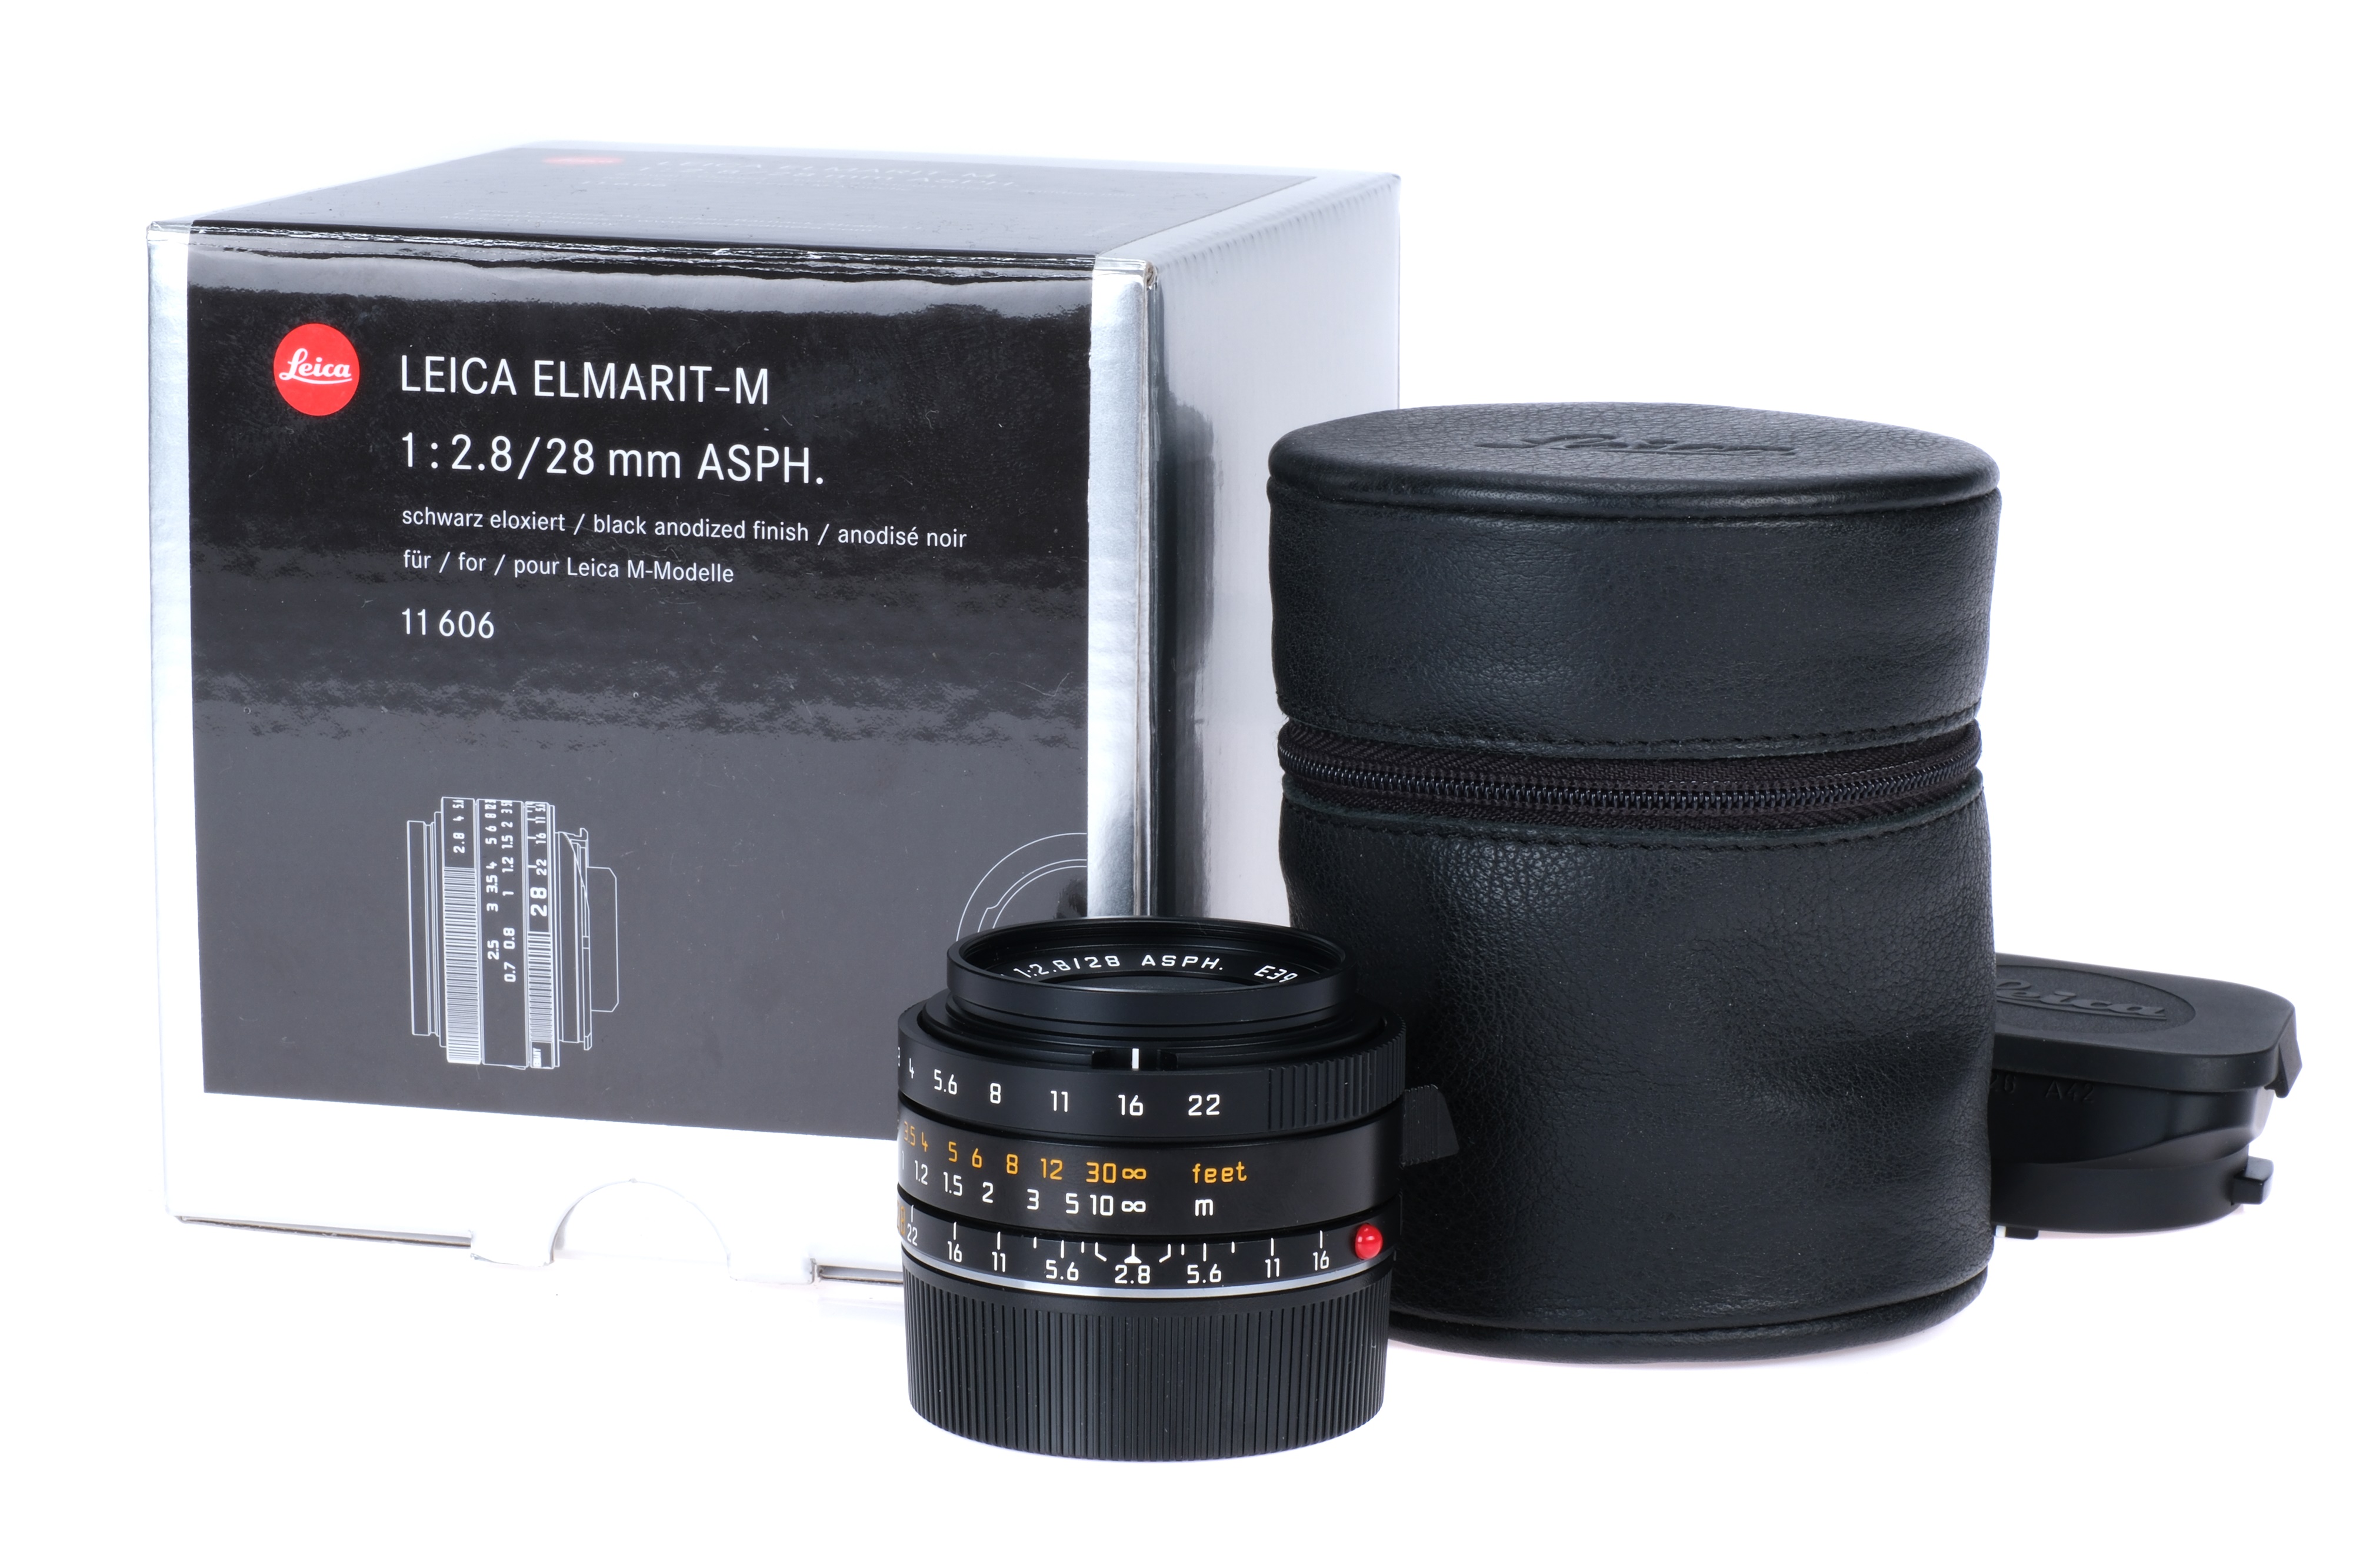 A Leitz Elmarit-M ASPH. f/2.8 28mm Lens,